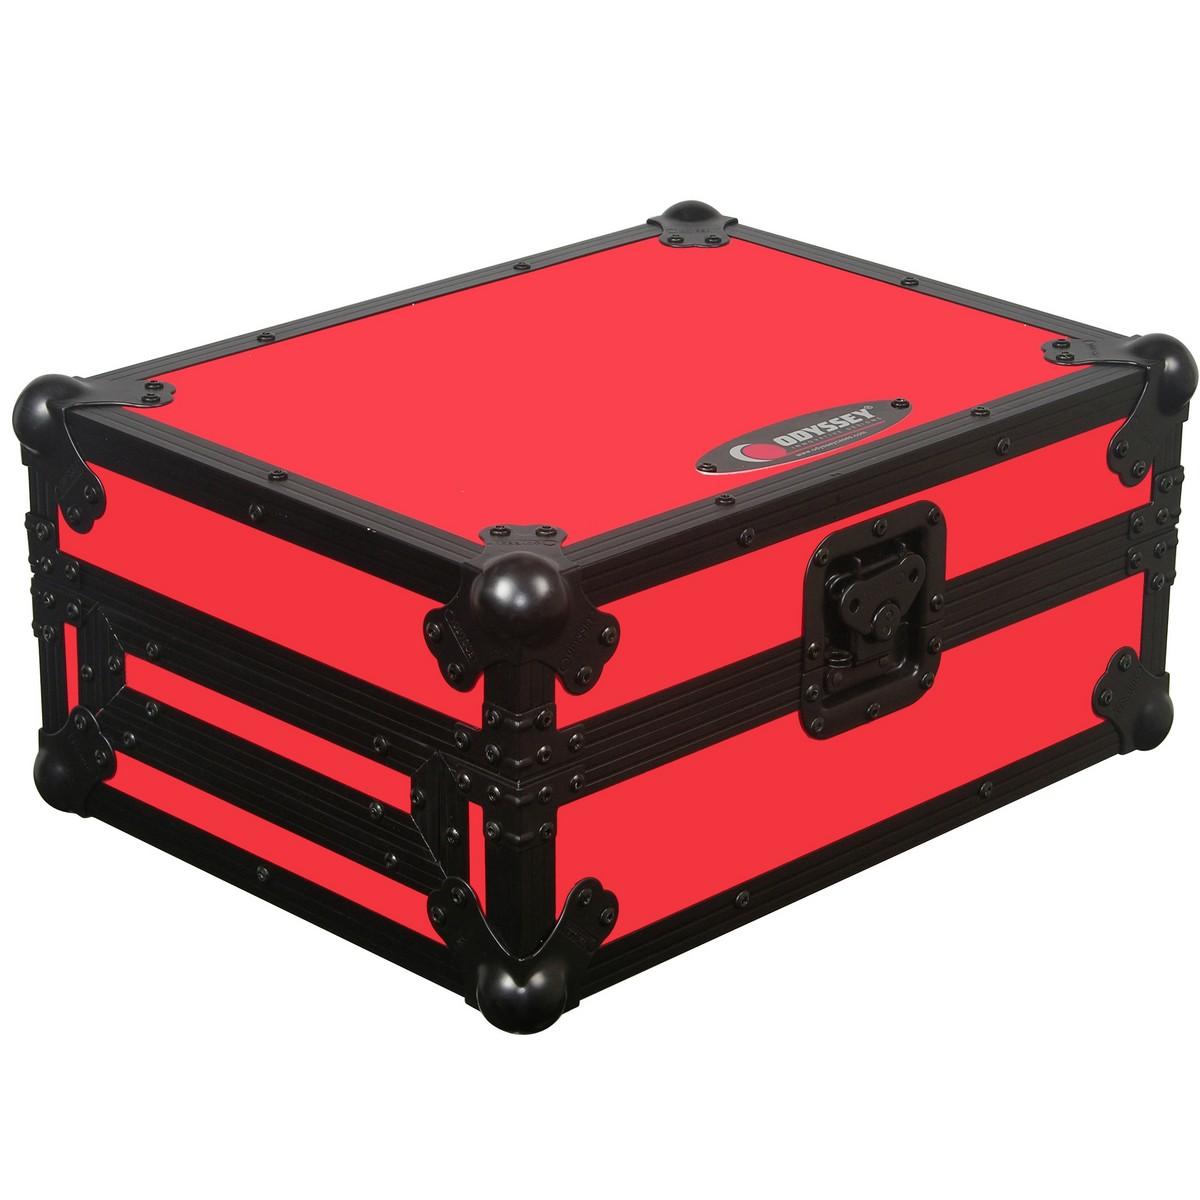 Odyssey Cases FRCDJBKRED | Black Red Large Format Media Player Case